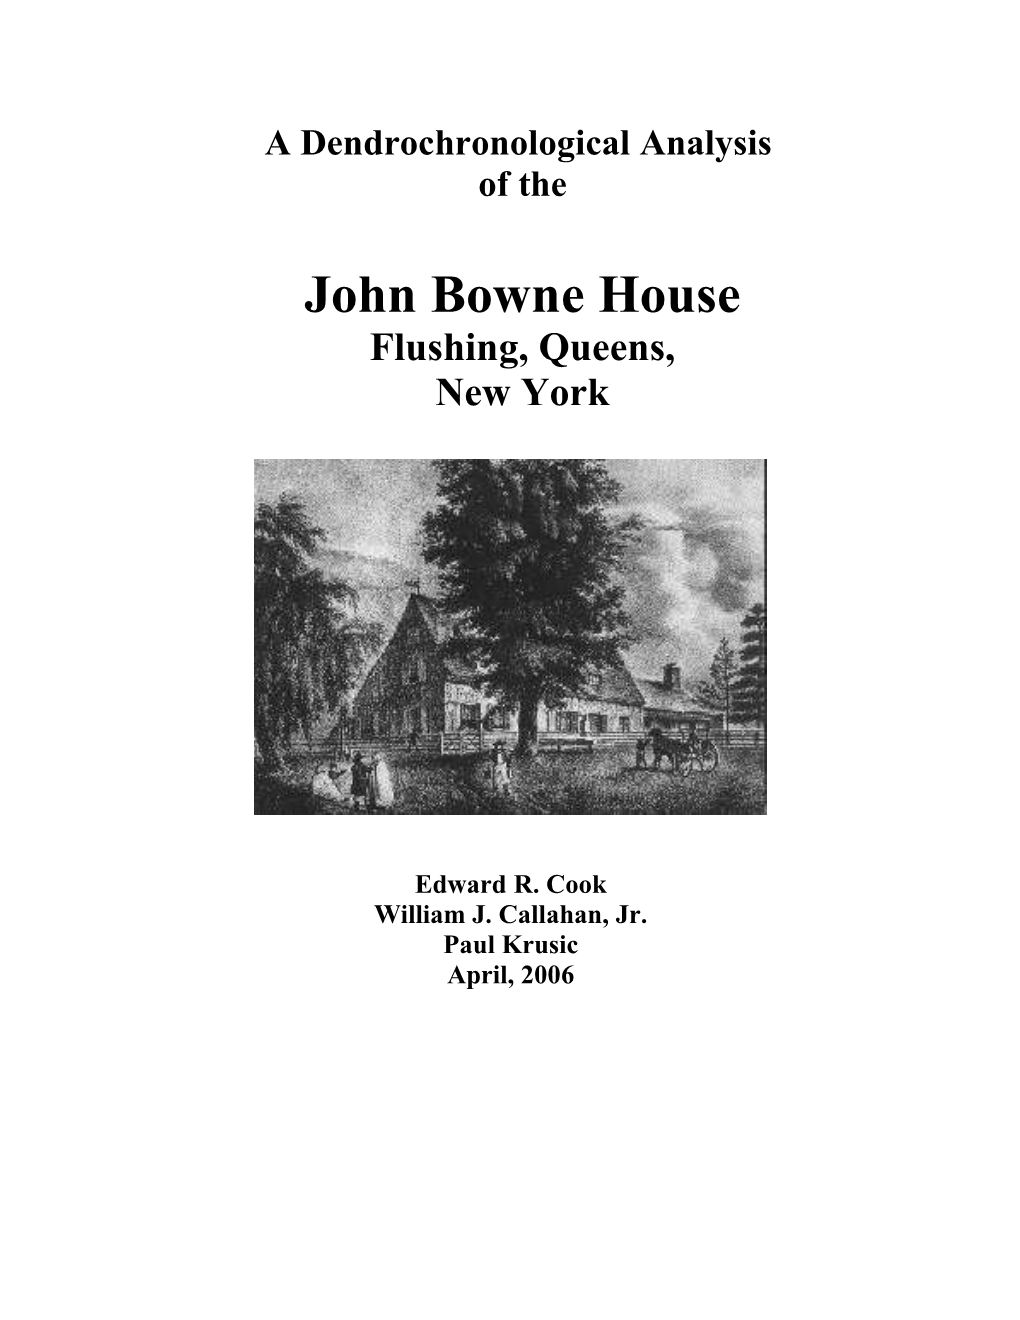 John Bowne House, Flushing, Queens, New York